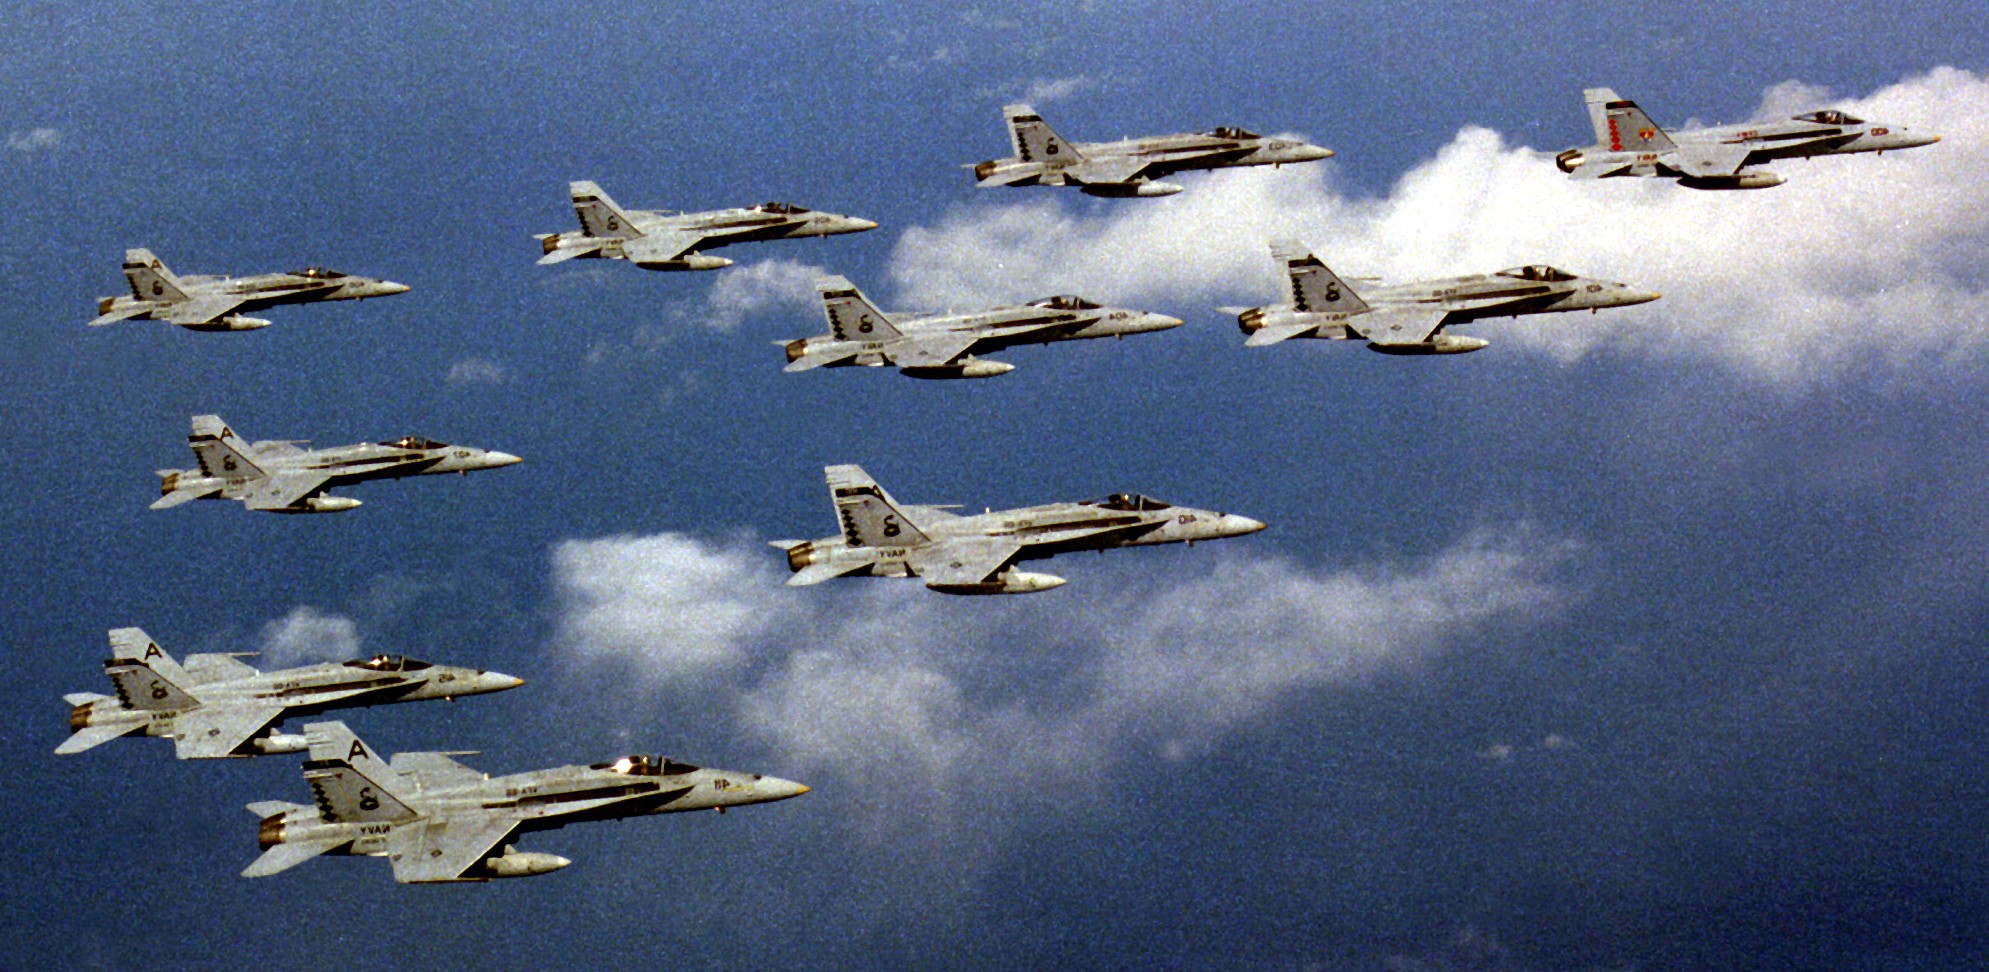 vfa-86 sidewinders strike fighter squadron f/a-18c hornet cvw-1 uss america cv-66 navy 124